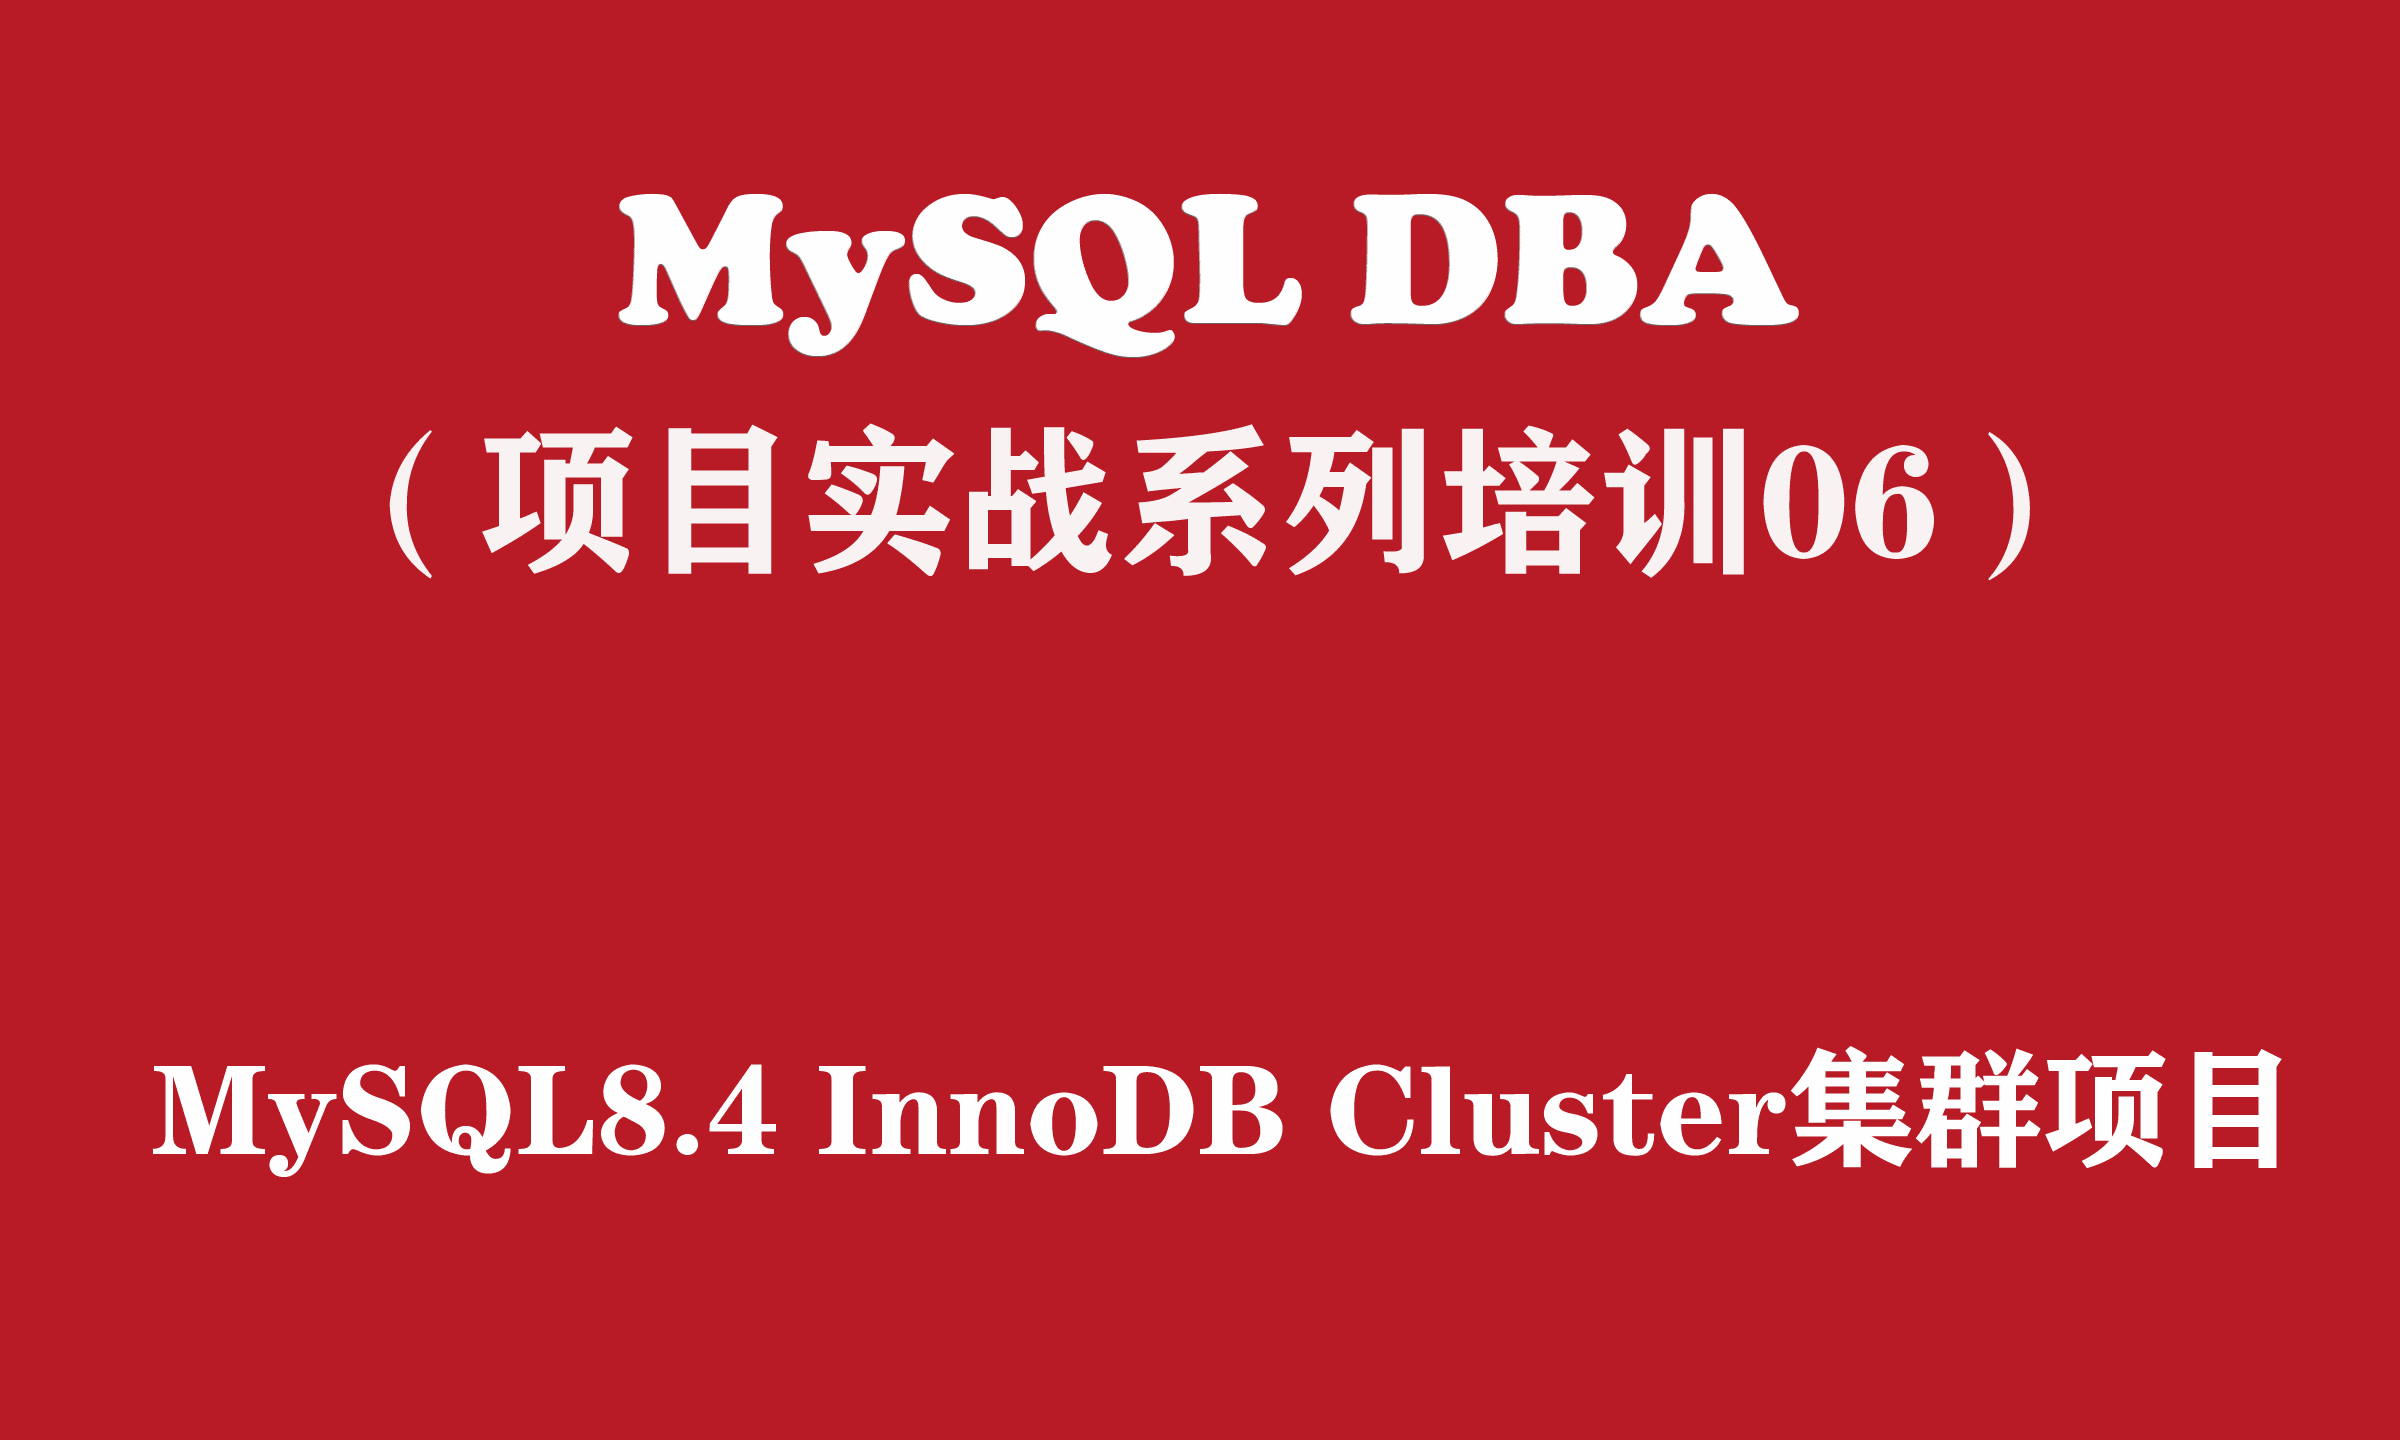  MySQL 8.4 InnoDB Cluster Project Practice [MySQL DBA Practice Training Series 06]